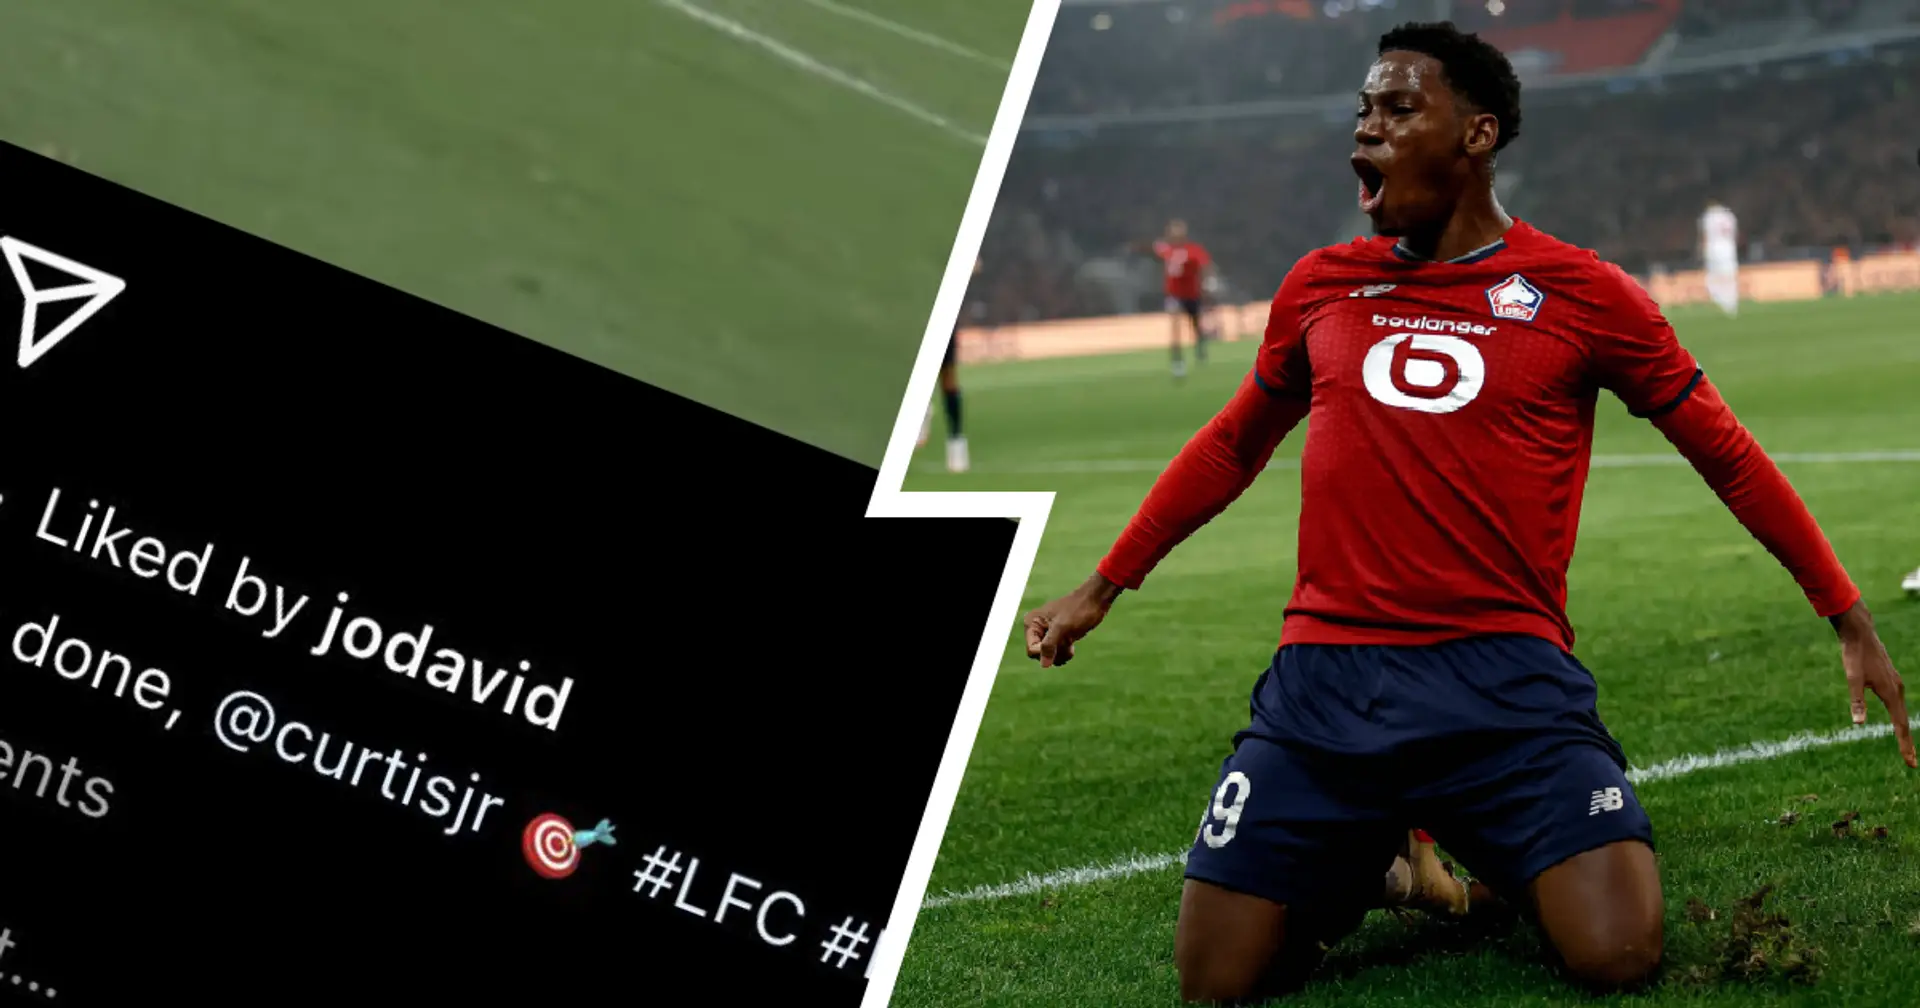 Social media hints: Rumoured target Jonathan David spotted liking LFC's Instagram post